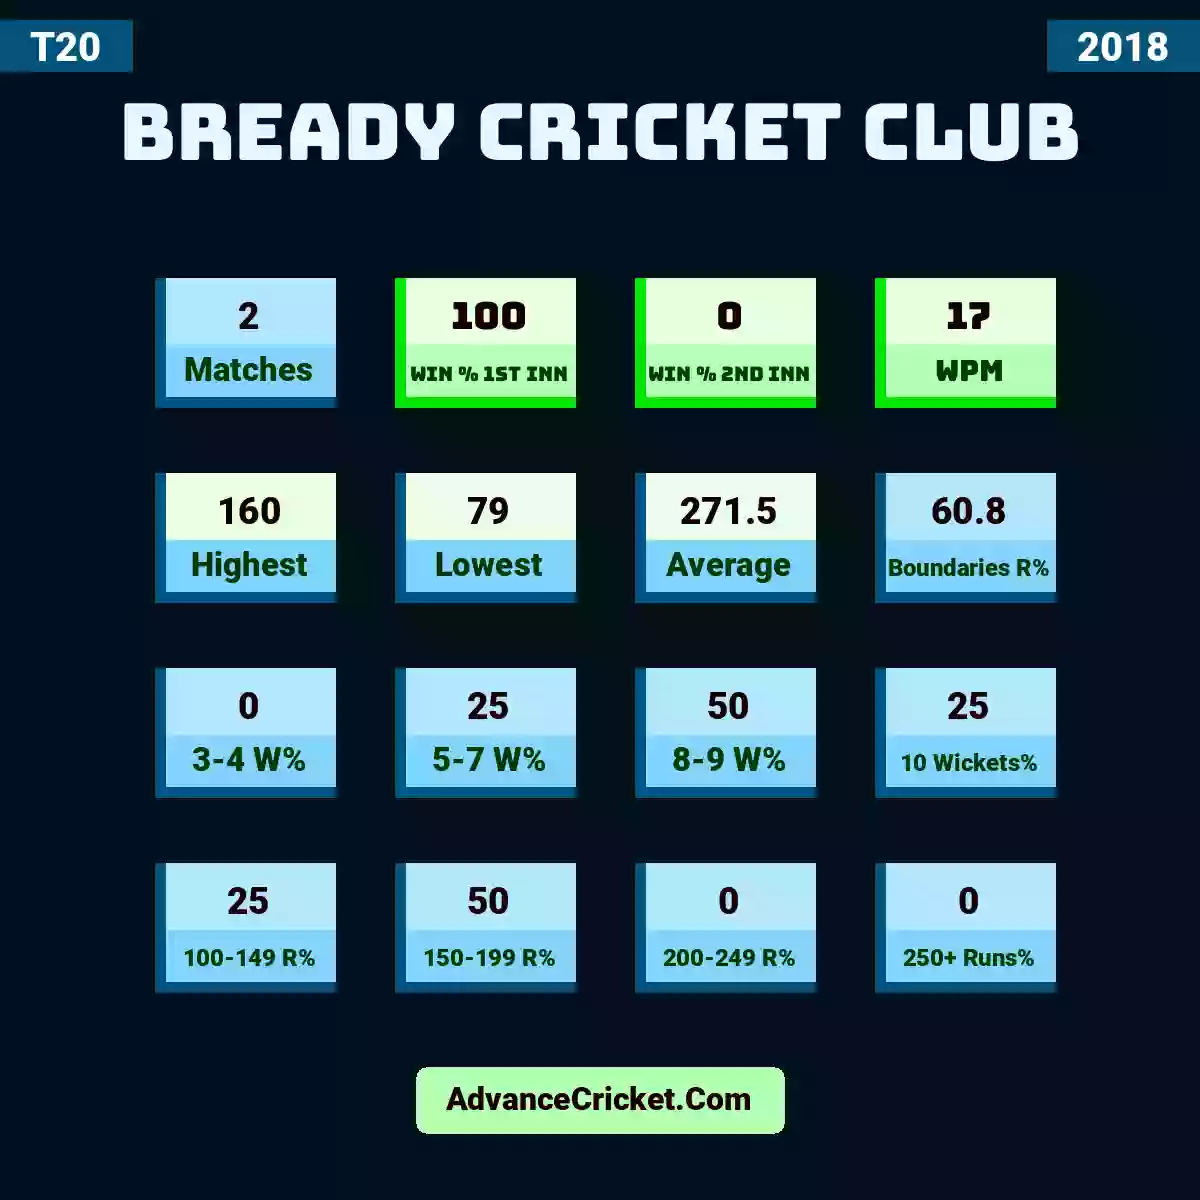 Image showing Bready Cricket Club with Matches: 2, Win % 1st Inn: 100, Win % 2nd Inn: 0, WPM: 17, Highest: 160, Lowest: 79, Average: 271.5, Boundaries R%: 60.8, 3-4 W%: 0, 5-7 W%: 25, 8-9 W%: 50, 10 Wickets%: 25, 100-149 R%: 25, 150-199 R%: 50, 200-249 R%: 0, 250+ Runs%: 0.